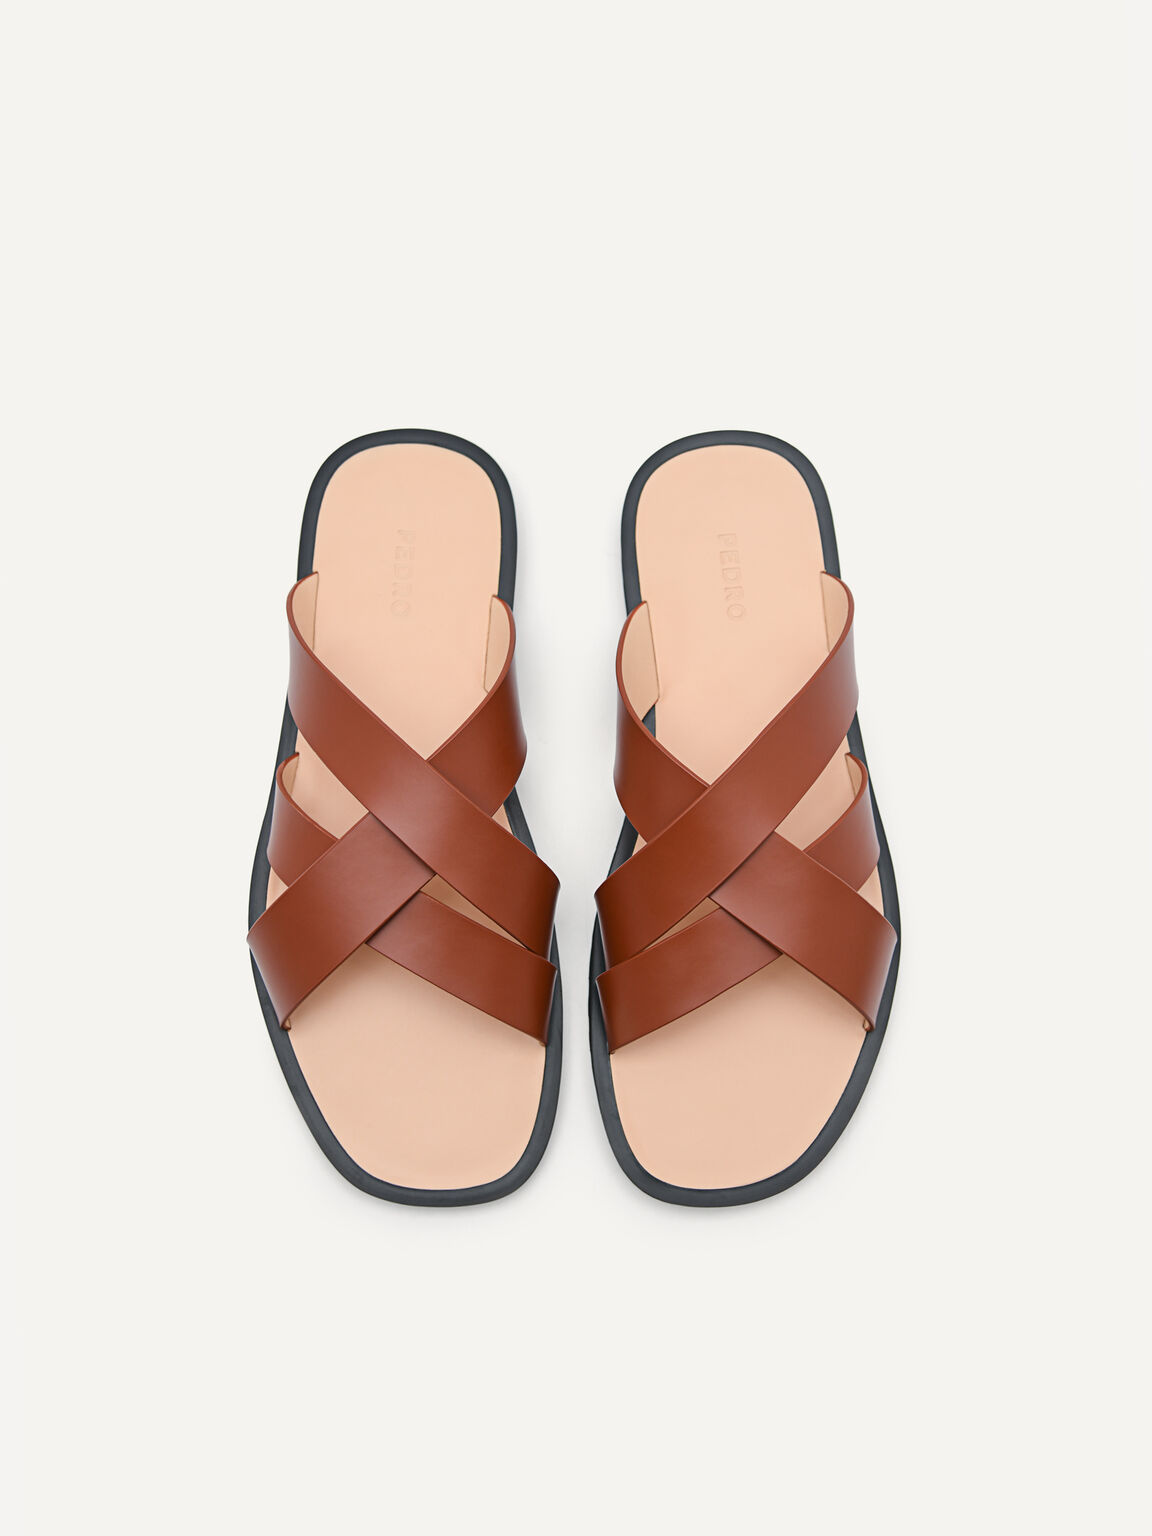 Dune Cross Strap Sandals, Brown